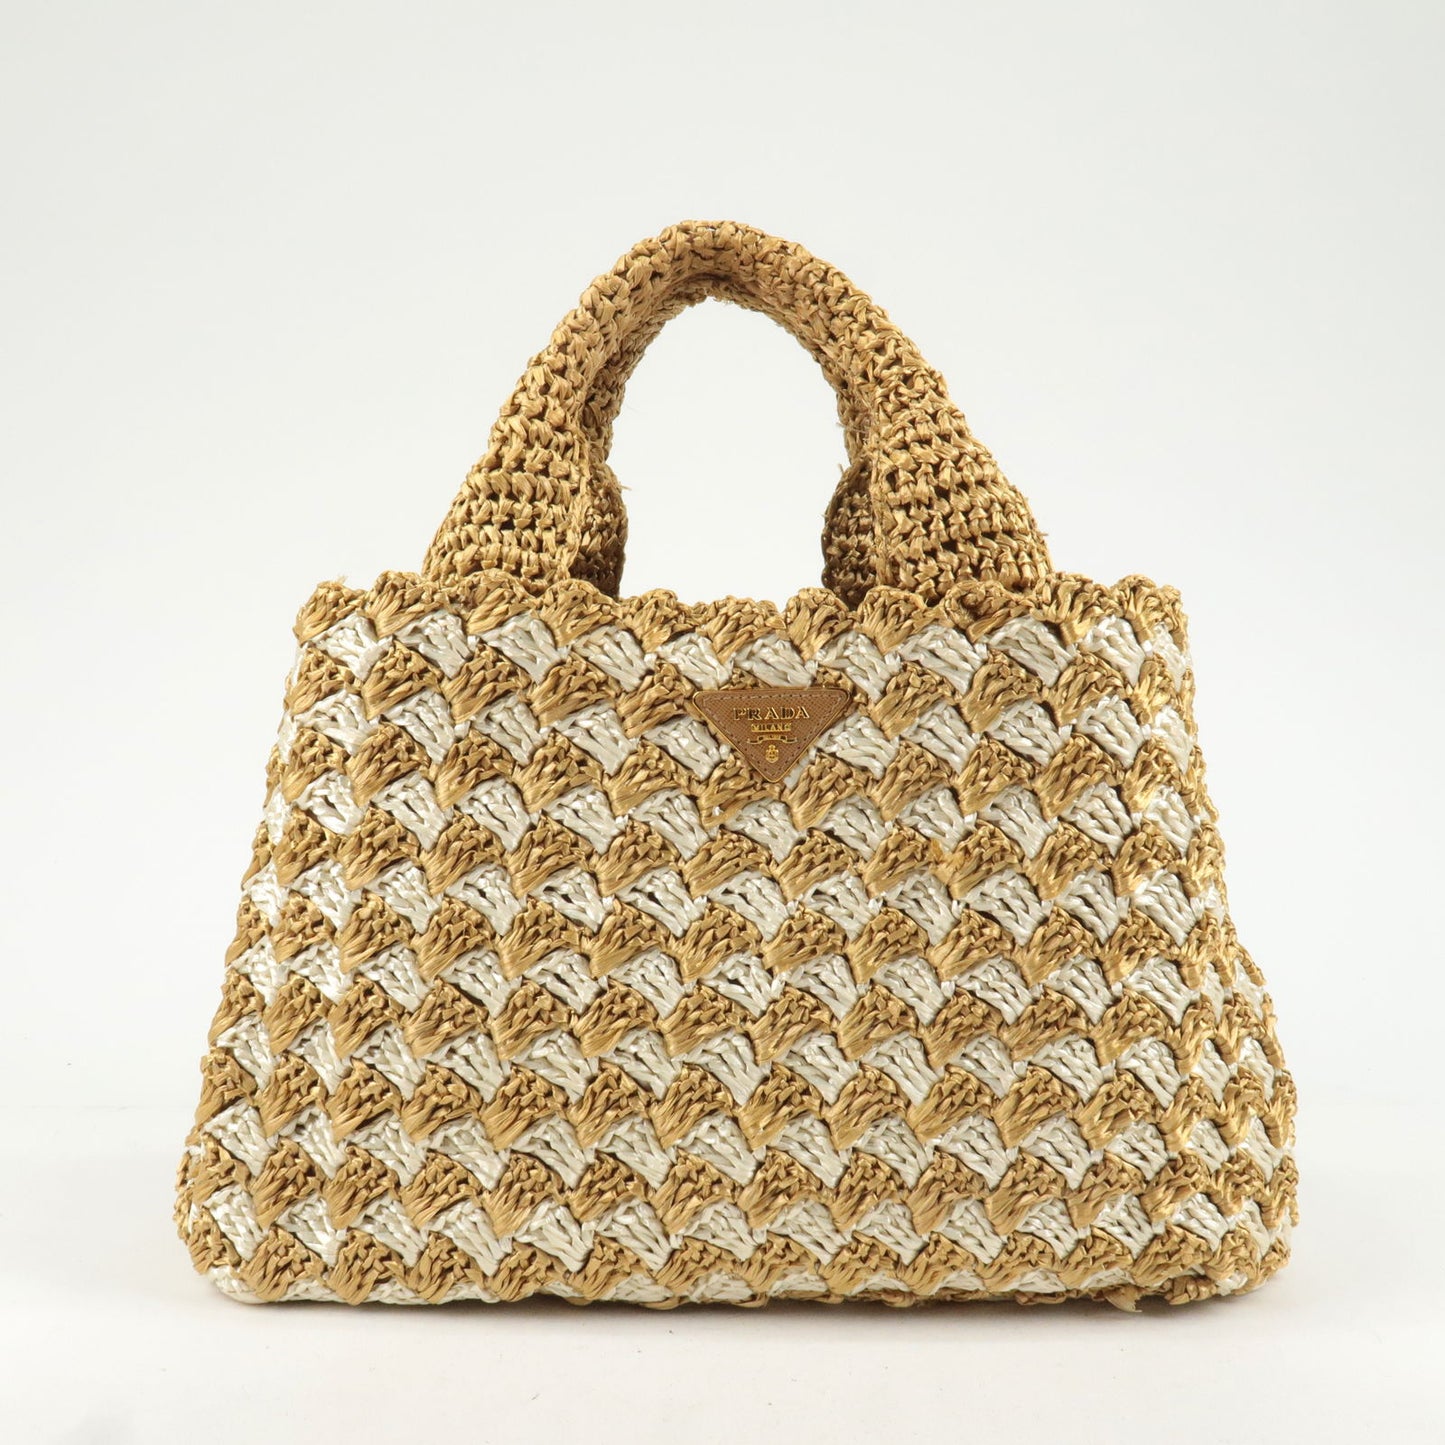 PRADA Logo Raffia Crochet Tote Bag Hand Bag Beige Ivory BN2303